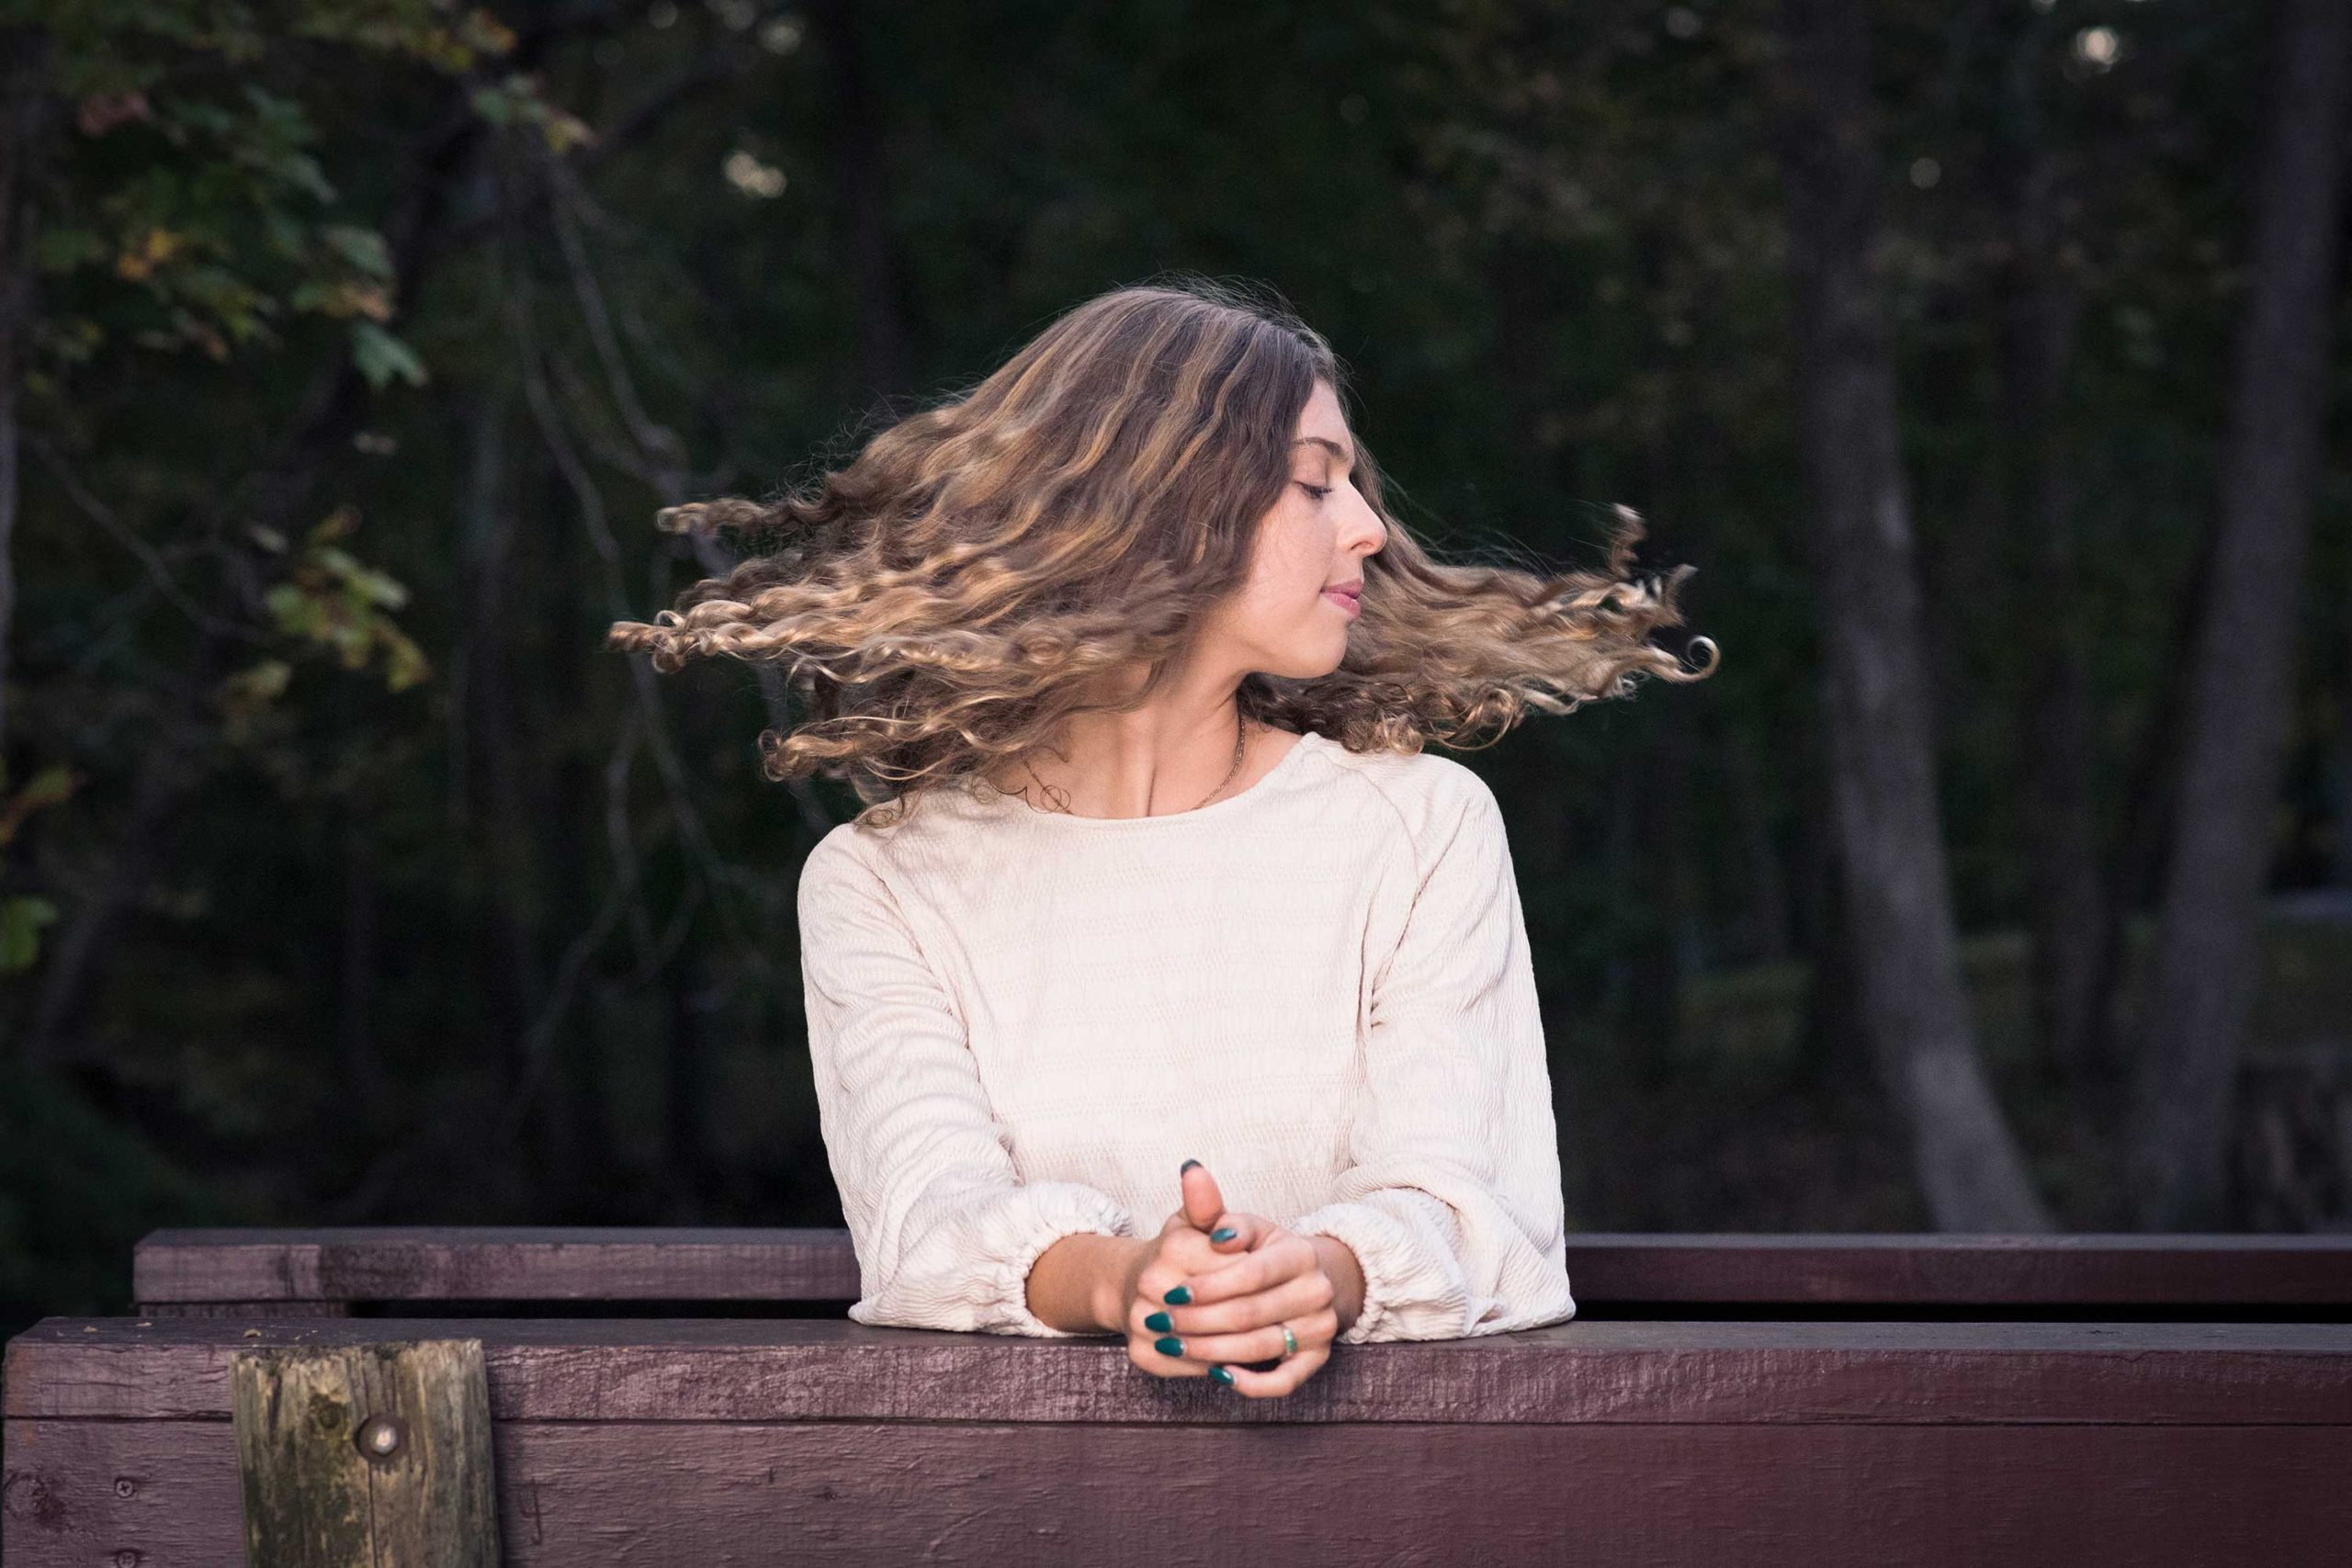 Senior Girl in woods flipping hair during Autumn.